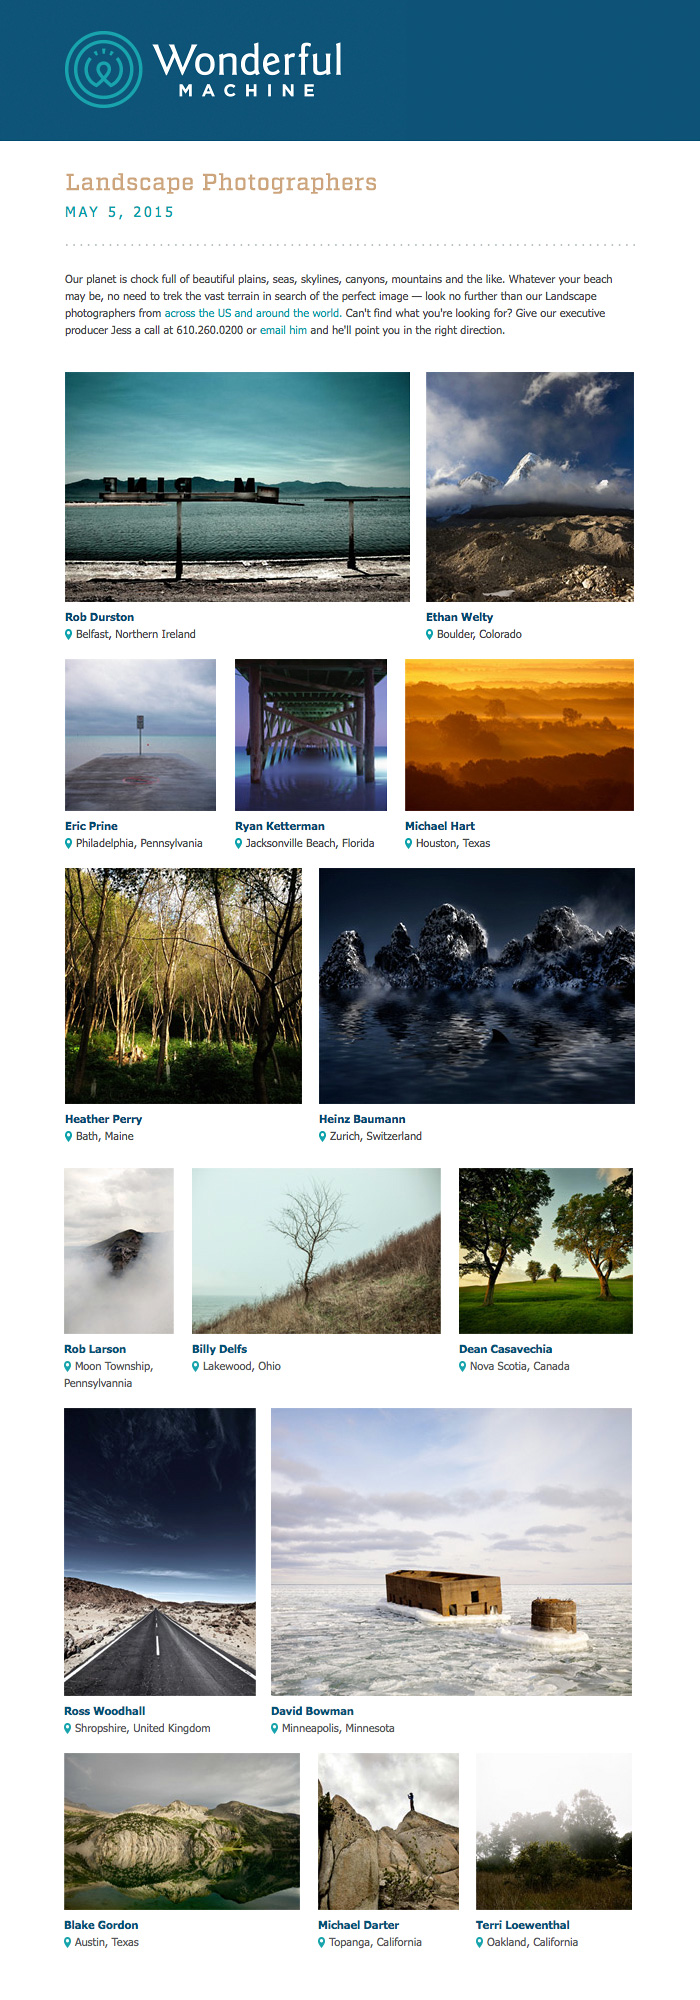 Landscape Photographers featured by Wonderful Machine